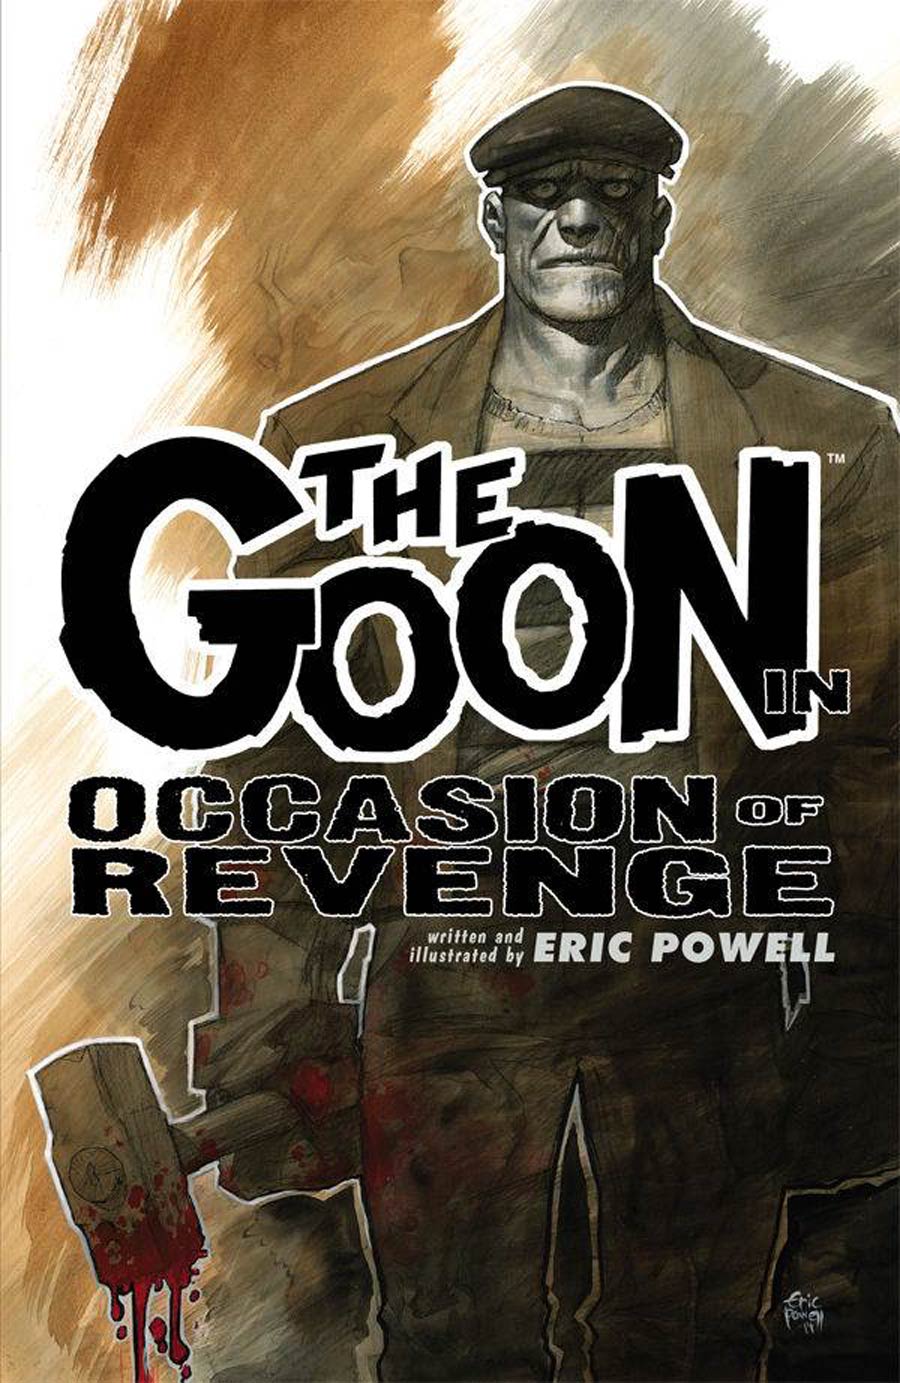 Goon Vol 14 Occasion Of Revenge Book 1 TP